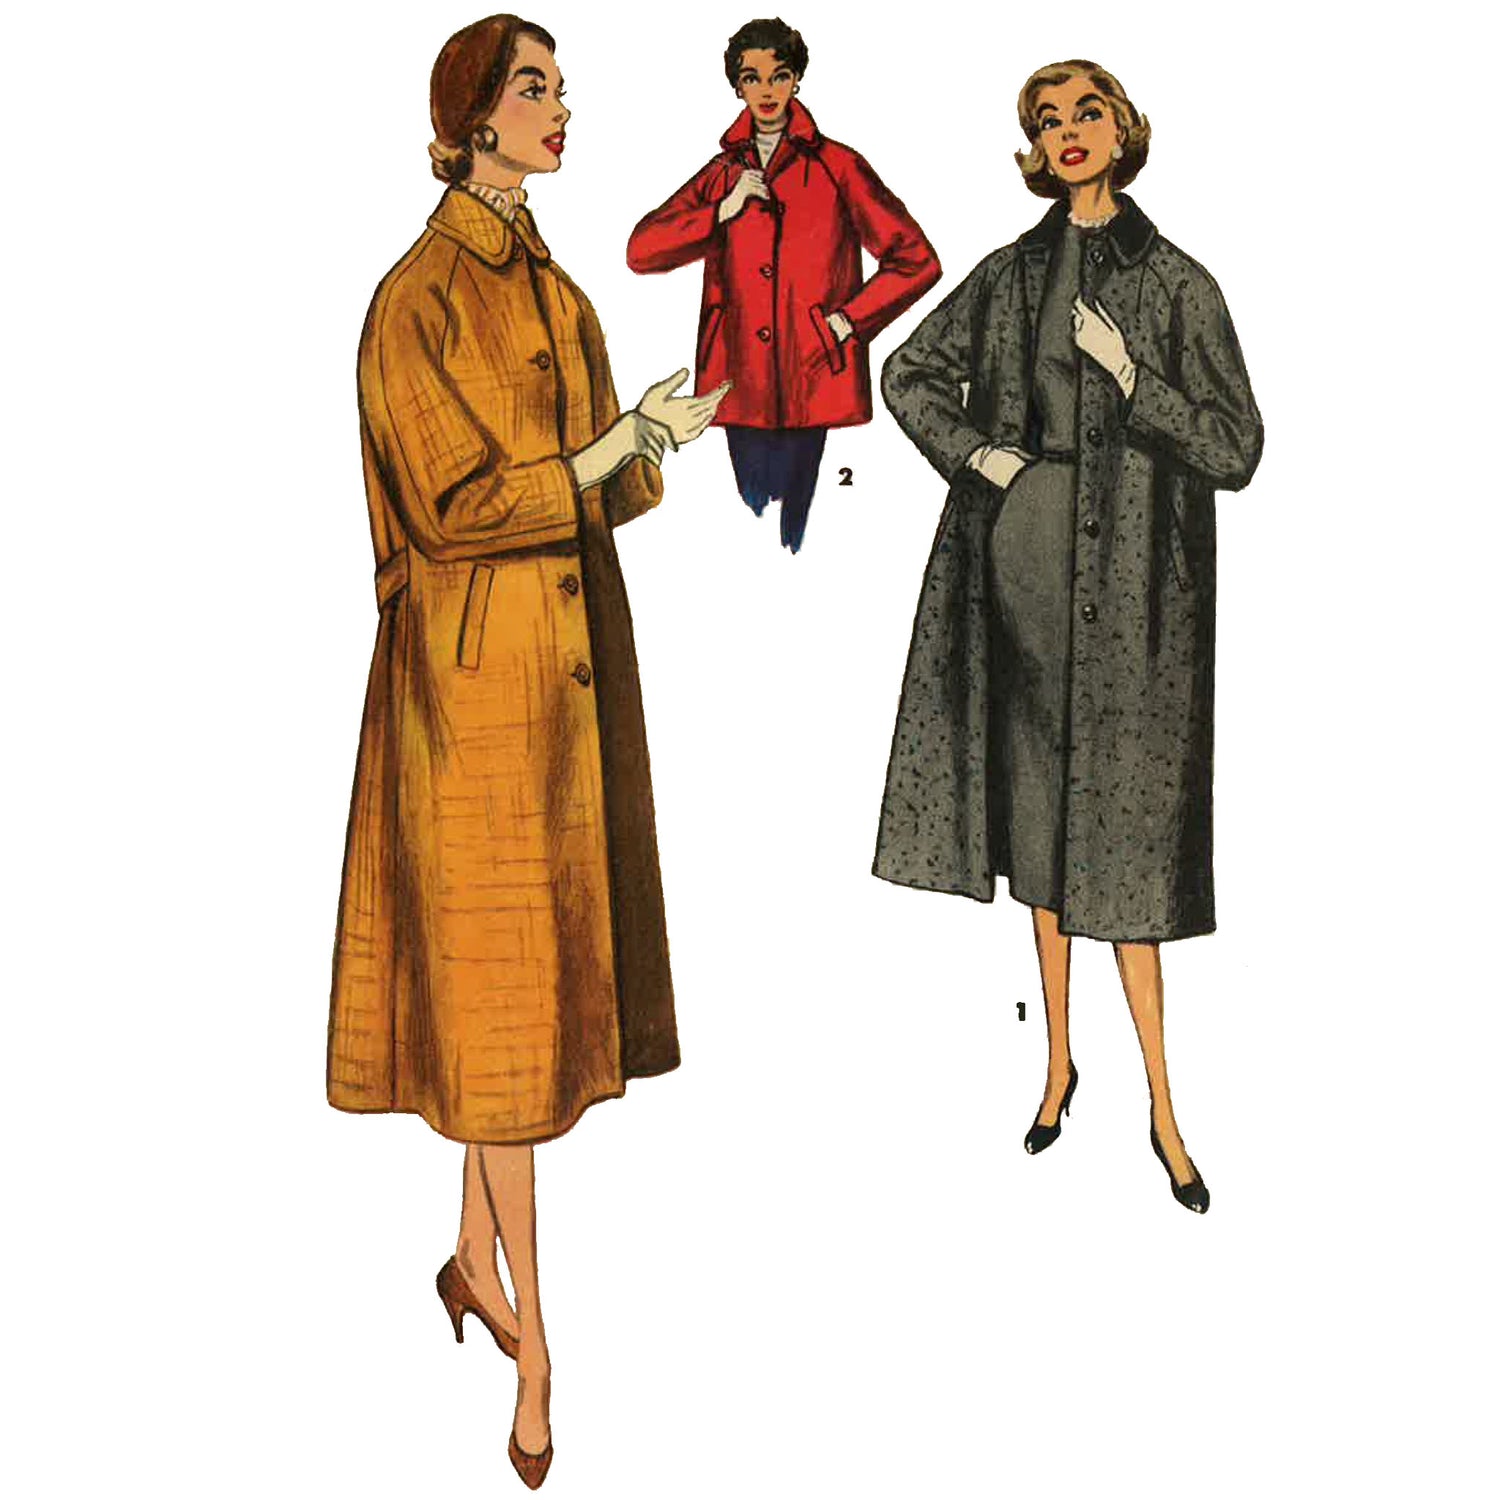 Women wearing stylish loose fitting coats and jacket